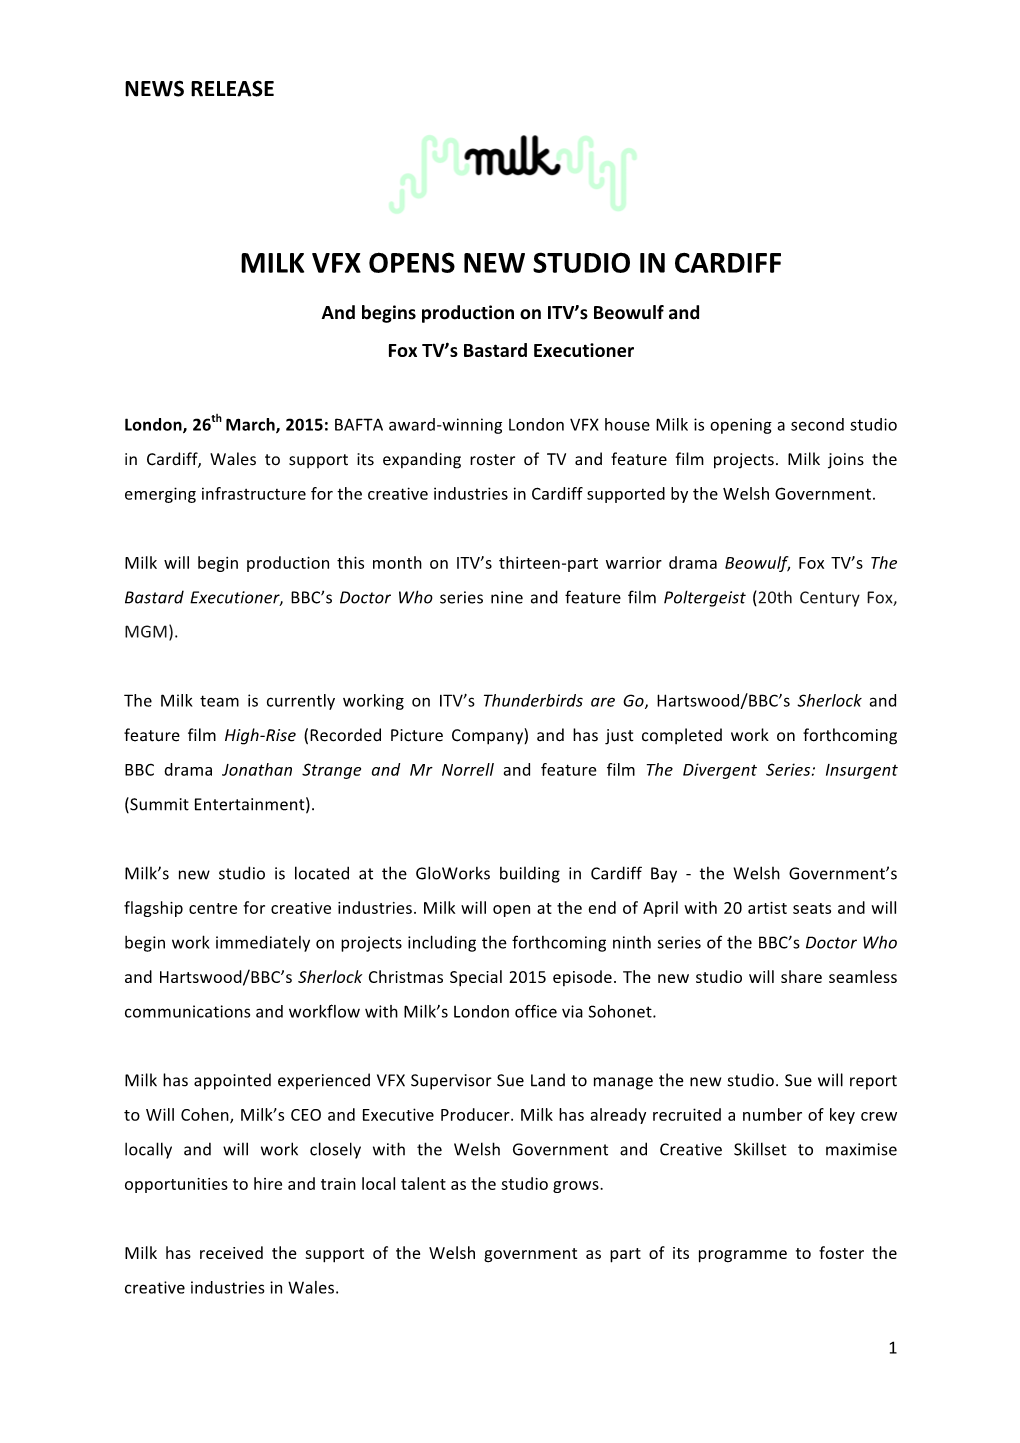 Milk Vfx Opens New Studio in Cardiff